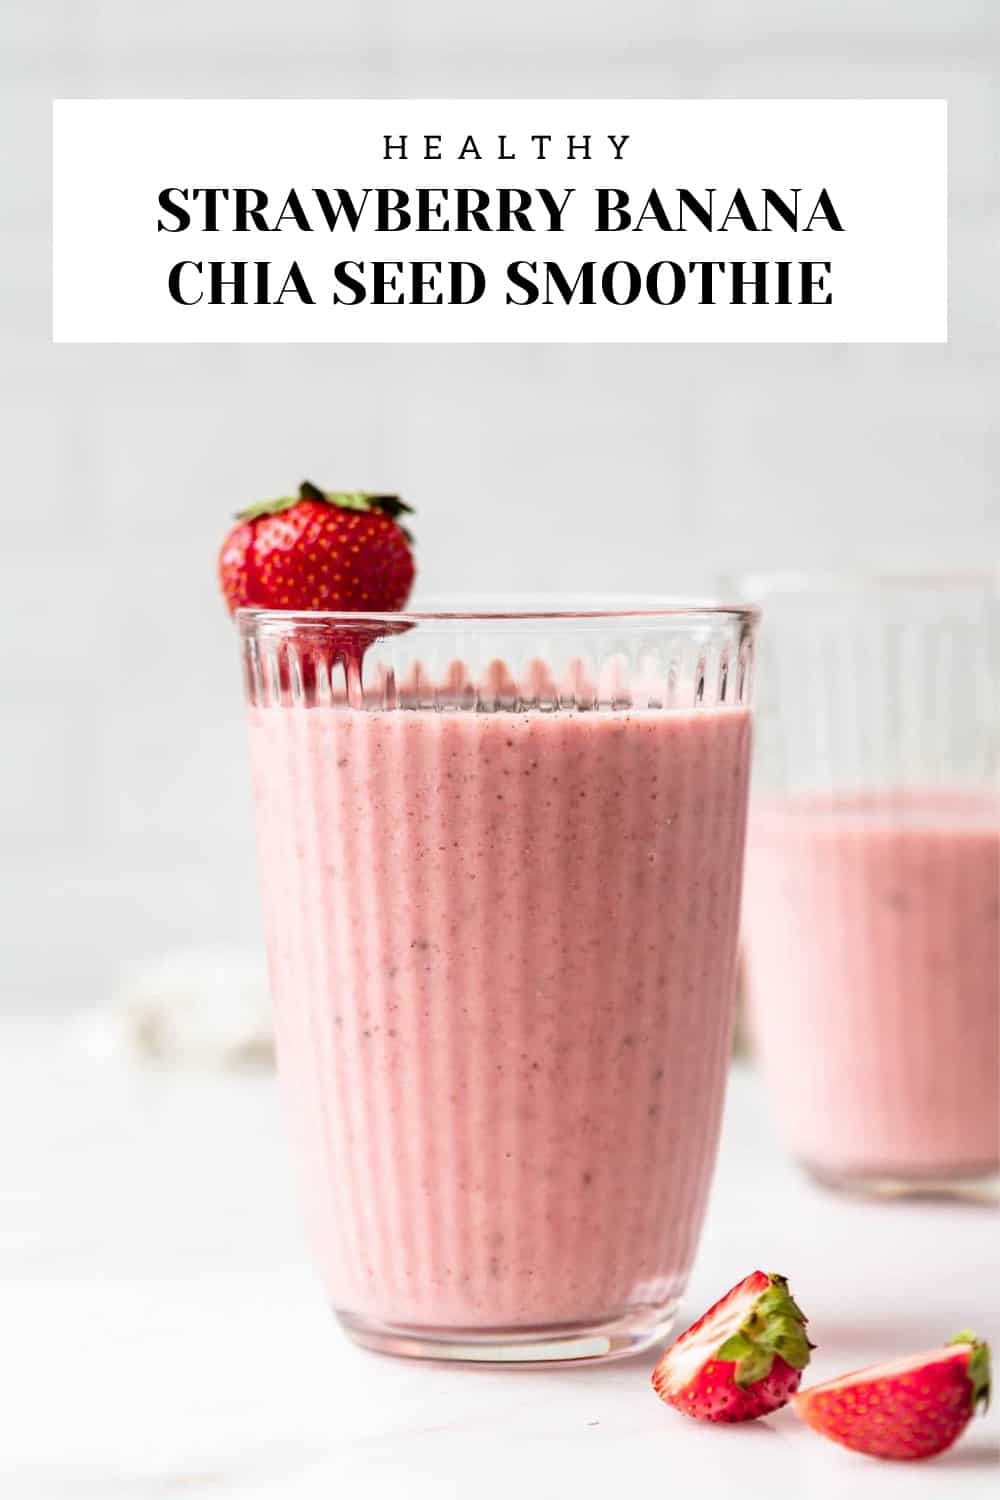 Strawberry Banana Chia Seed Smoothie (5 ingredients!) - Choosing Chia